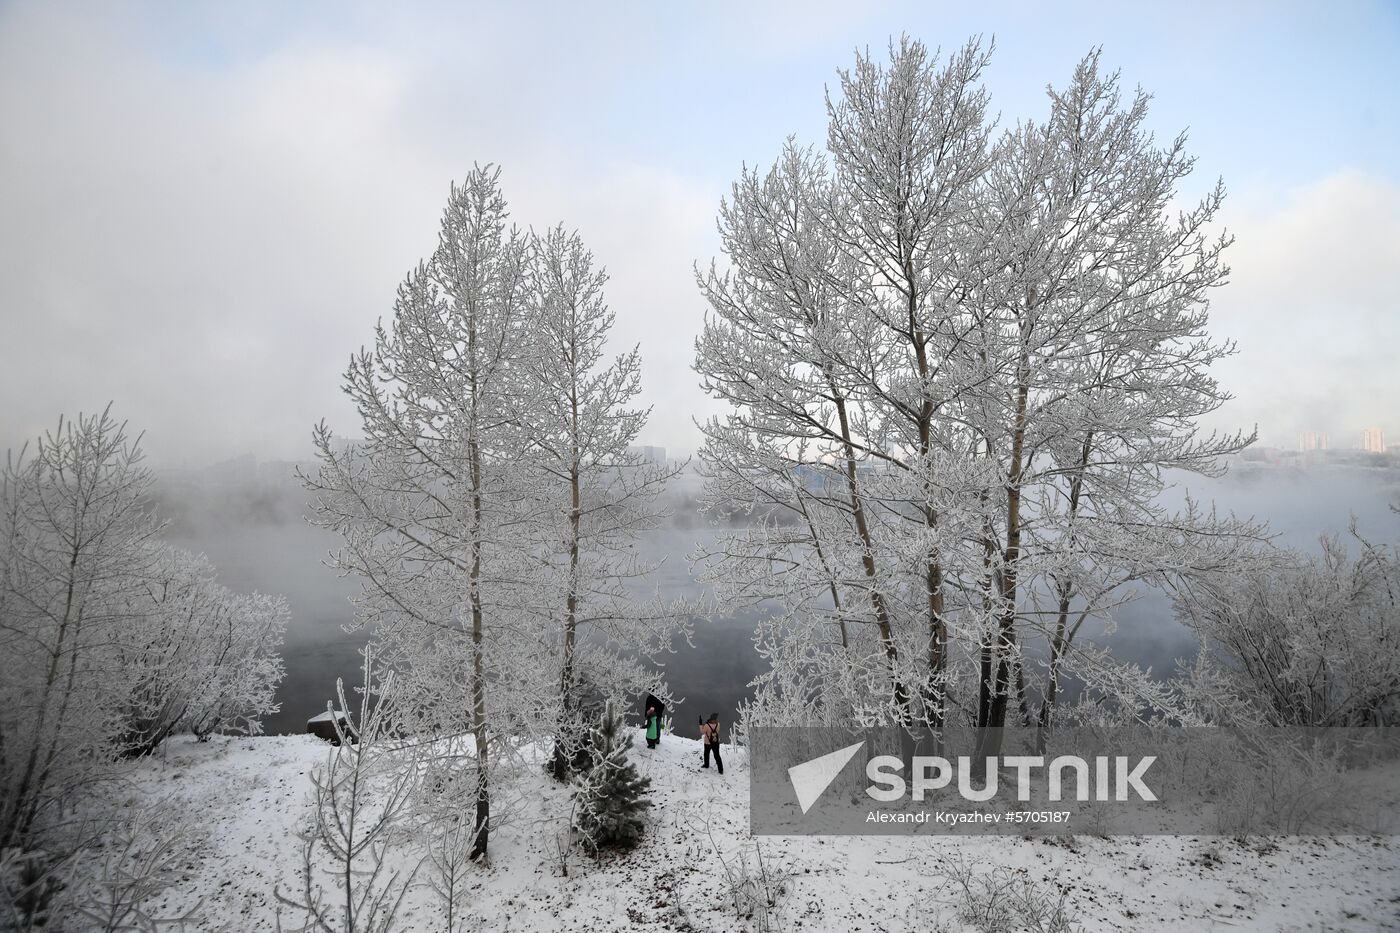 Subzero temperatures in Krasnoyarsk Territory